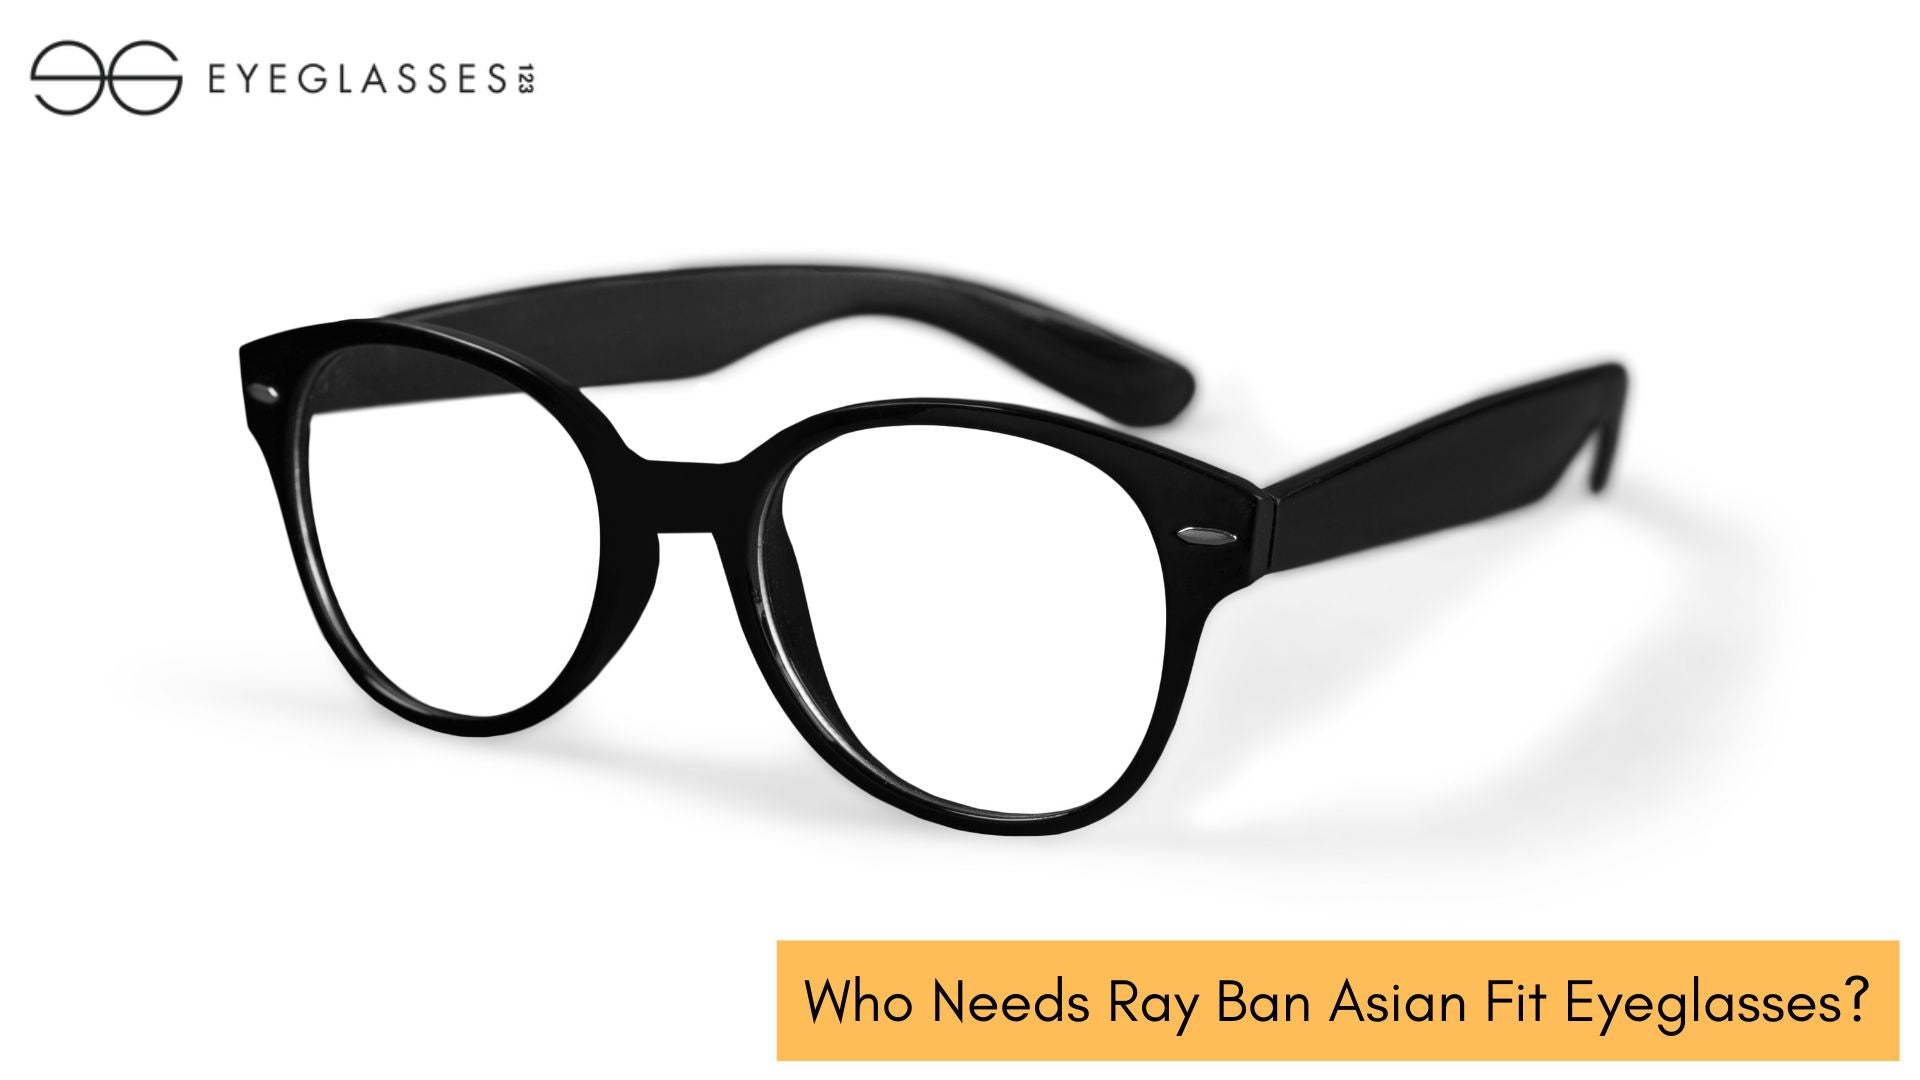 Who Needs Ray Ban Asian Fit Eyeglasses?